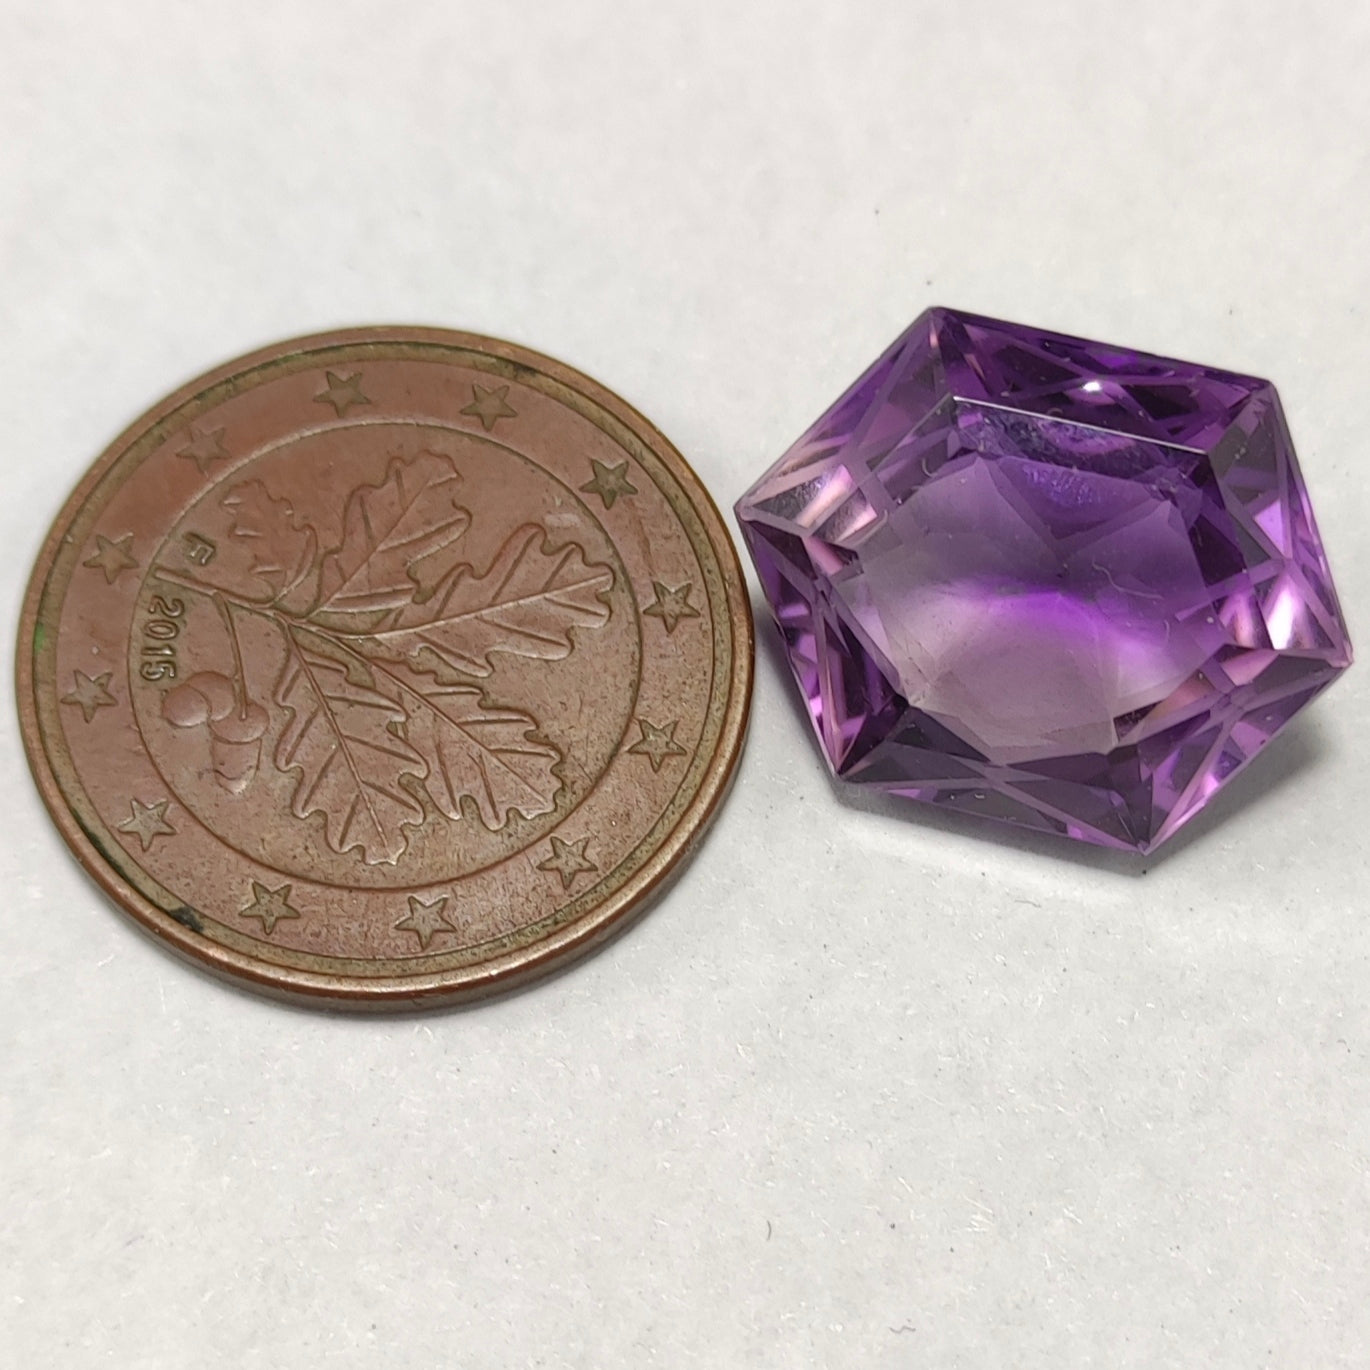 ARSAA GEMS AND MINERALSNatural purple fancy cut hexagonal shape faceted amethyst gem, 11.5ct - Premium Amethyst Cut Stone from ARSAA GEMS AND MINERALS - Just $35! Shop now at ARSAA GEMS AND MINERALS